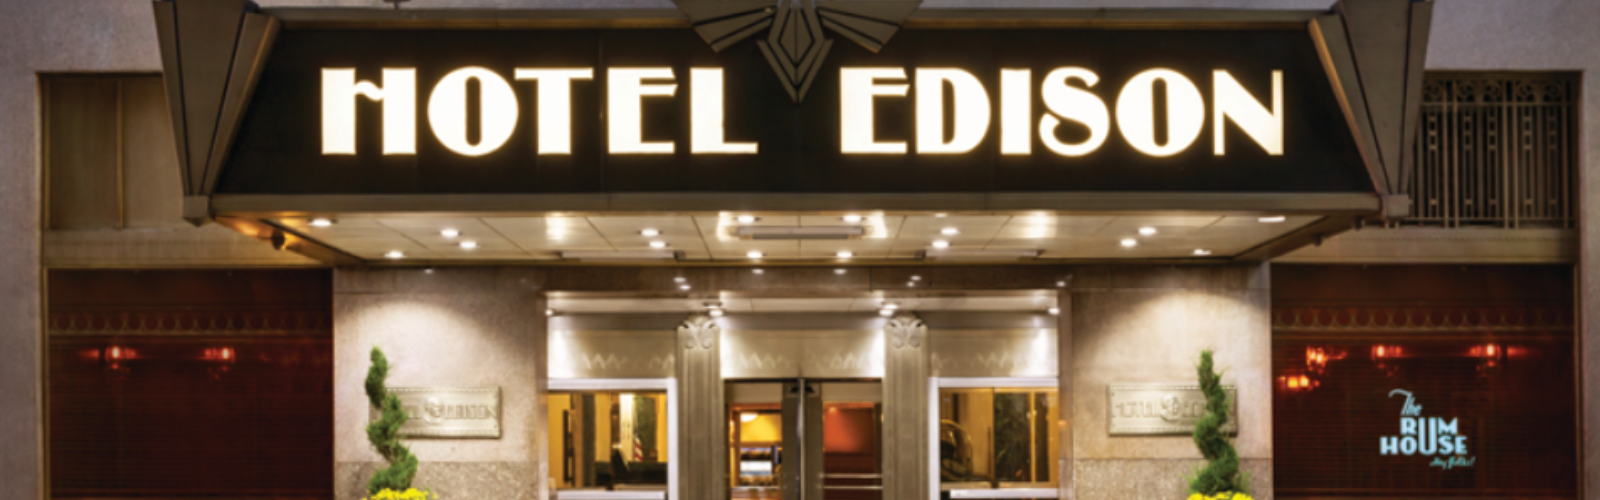 hotel Edison in NY